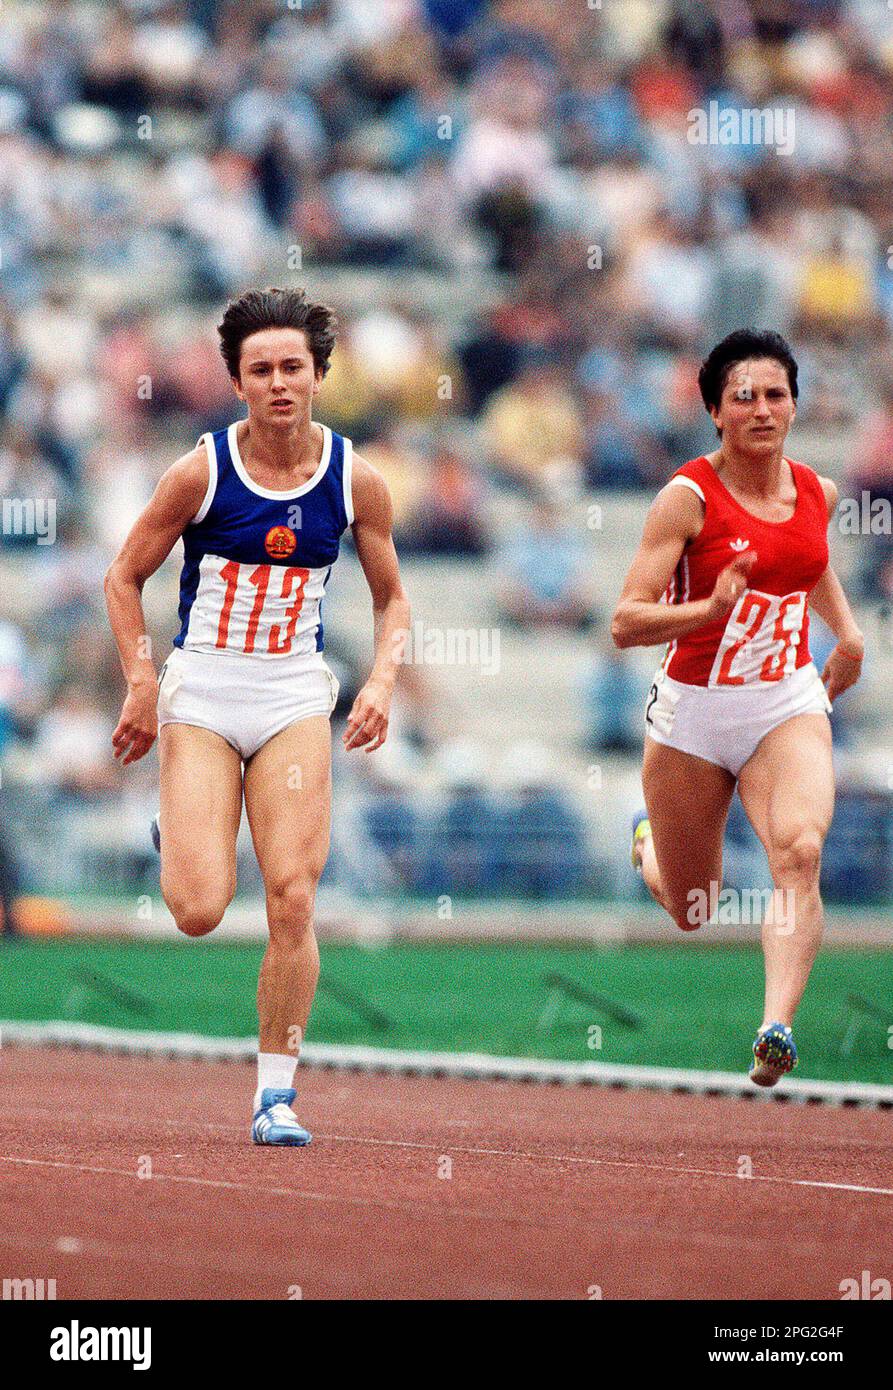 ARCHIVE PHOTO: Marlies GOEHR will be 65 on March 21, 2023, Marlies GOEHR (left), OELSNER, GOHR, GDR, athlete, action, 200 m run, sprint, left Claudia STEGER, GER, at the European Athletics Championships in Rome from 29.08.-06.09.1987, ?SVEN SIMON, Princess-Luise-Str.41#45479 Muelheim/Ruhr#tel.0208/9413250#fax 0208/9413260#account 1428150 C ommerzbank E ssen BLZ 36040039 #www.SvenSimon.net# e-mail: SvenSimon@t-online.de. Stock Photo